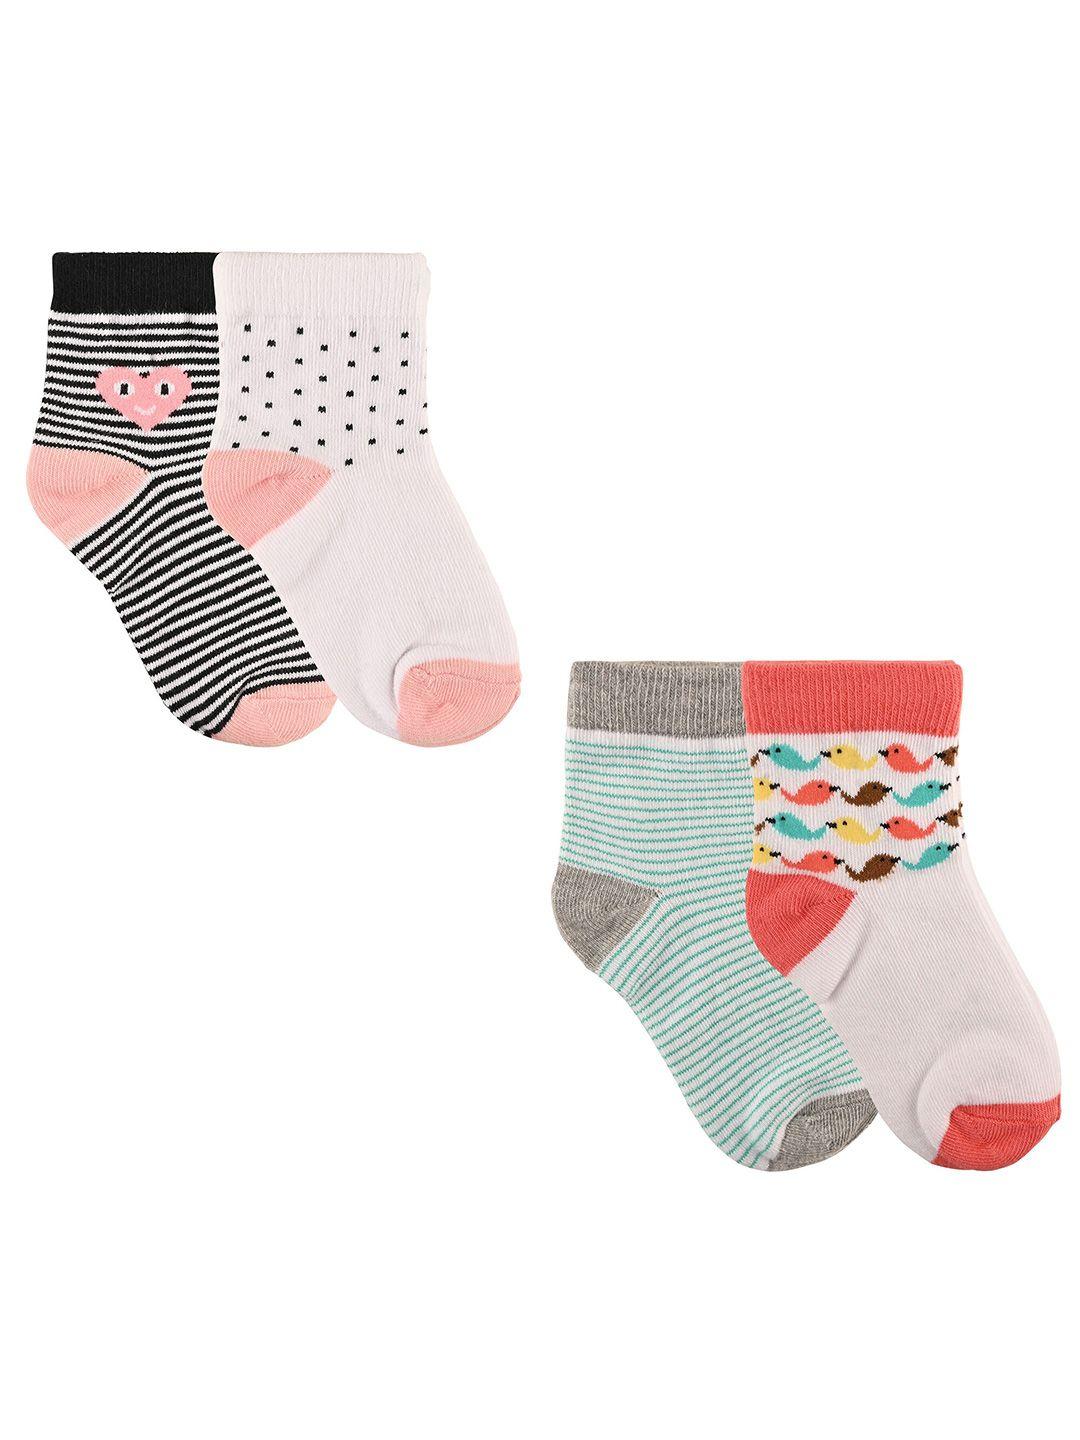 nuluv girls pack of 4 patterned socks